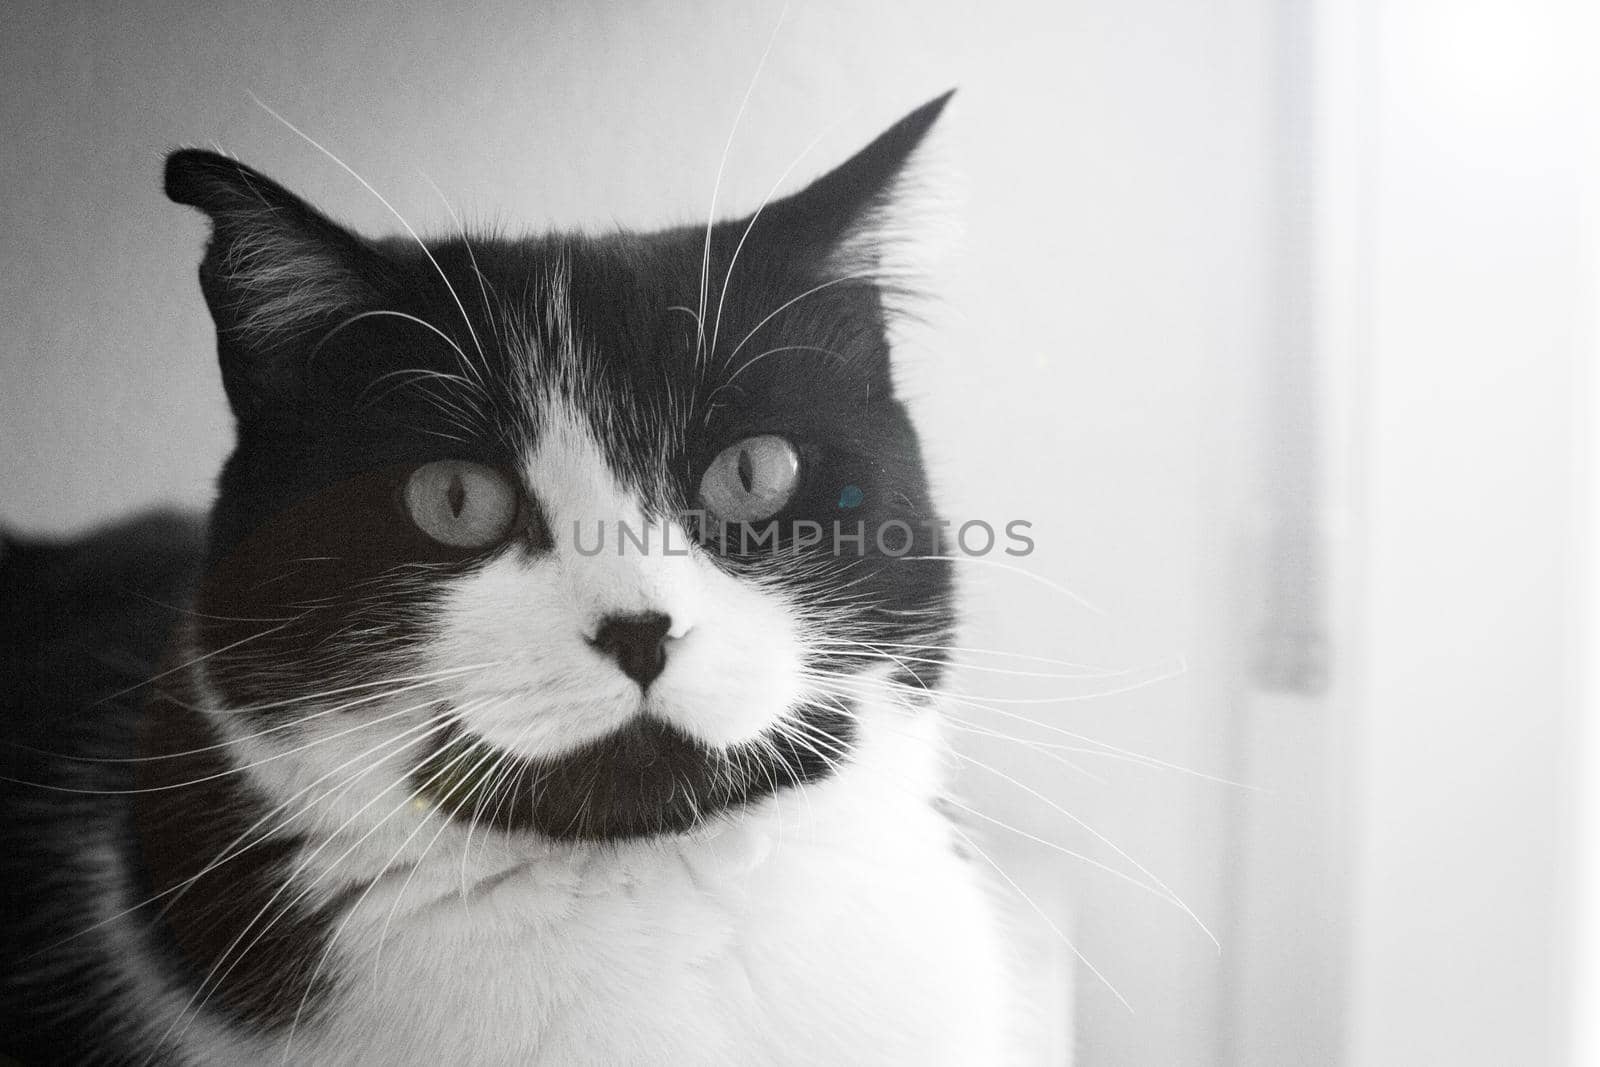 Immunodeficient black and white cat portrait by GemaIbarra